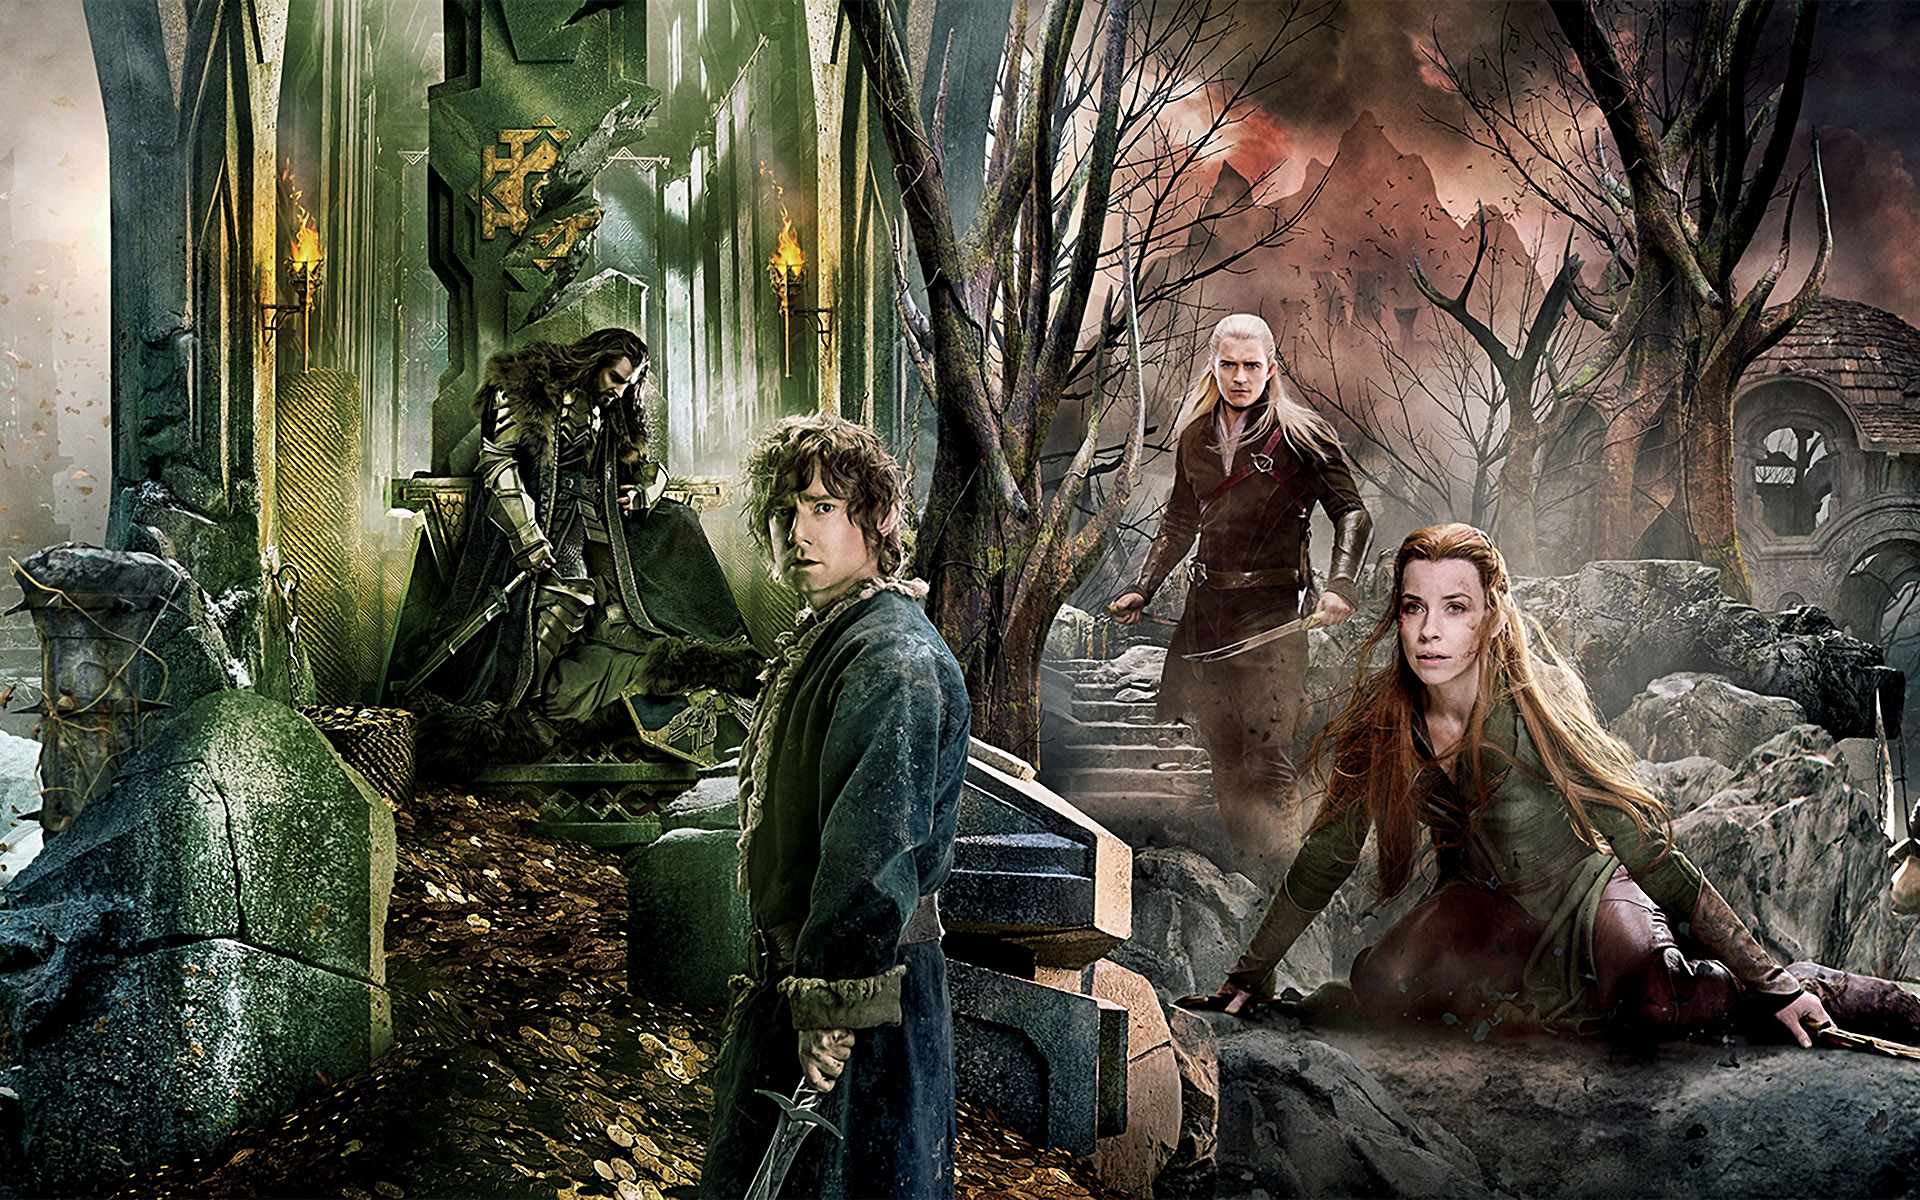 The Hobbit HD Wallpaper